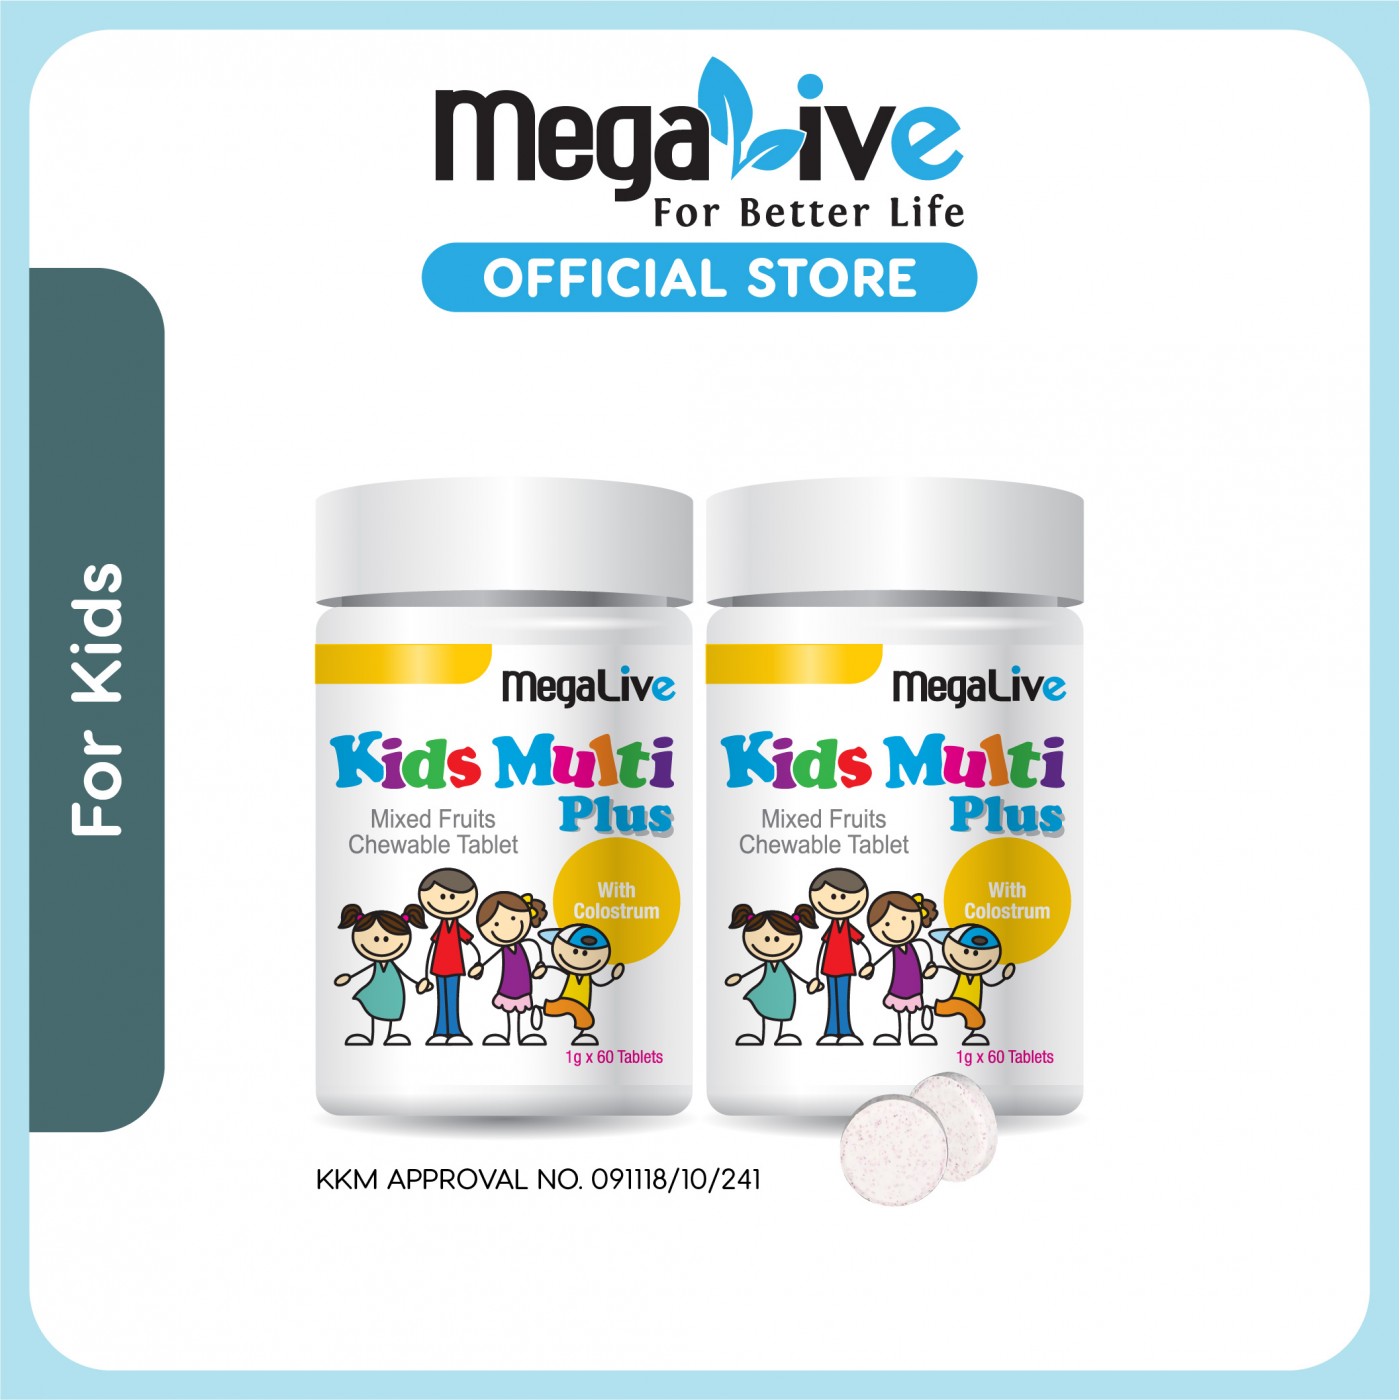 MegaLive Kids Multi Plus